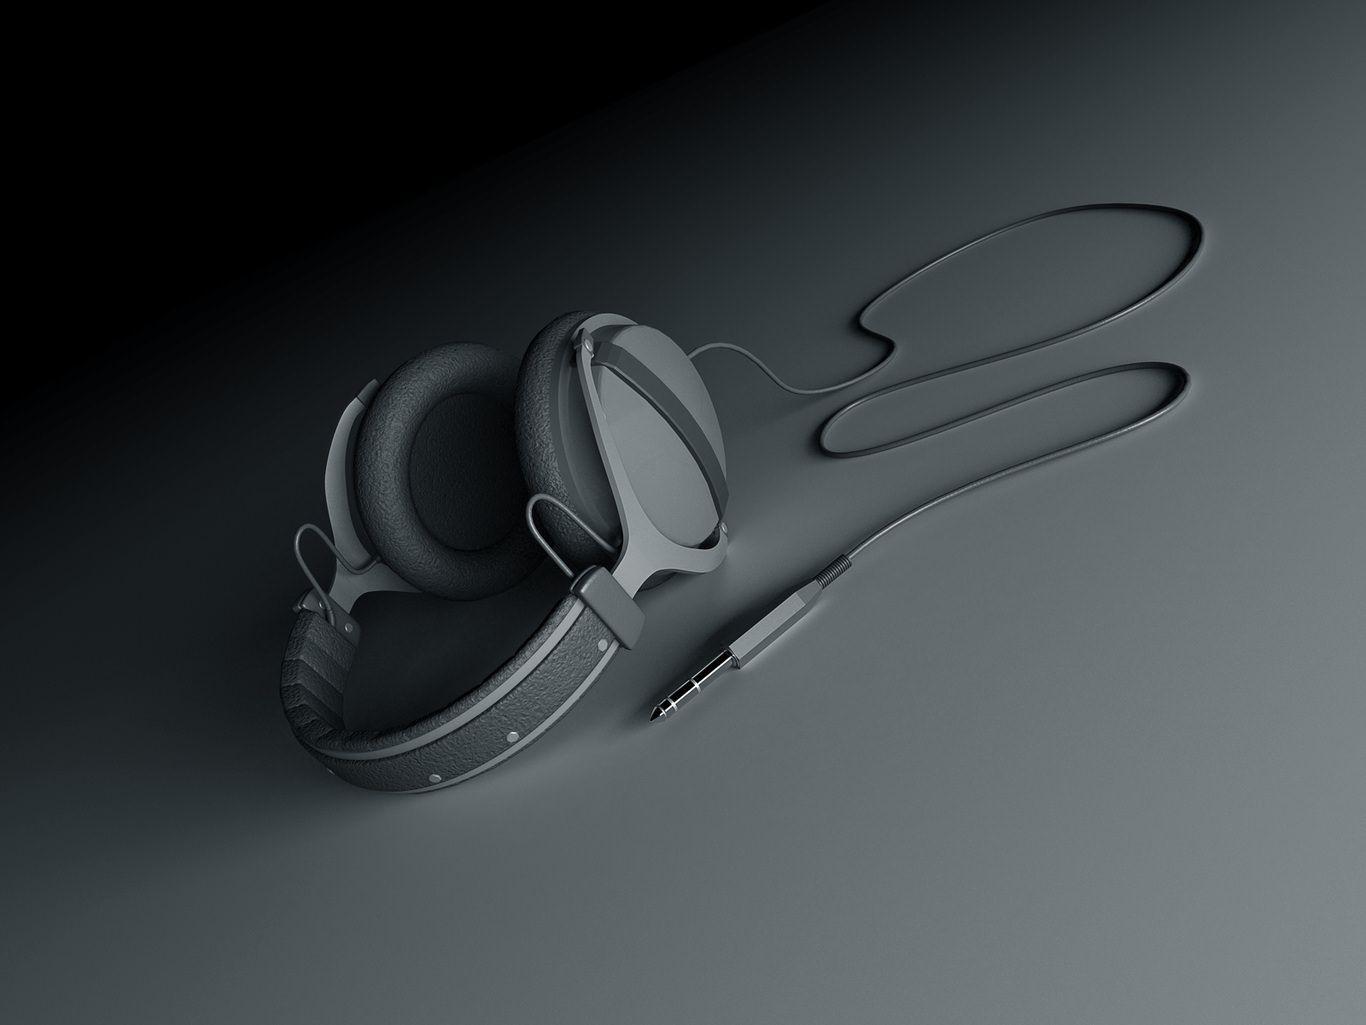 Headphones Wallpaper, Headset Background, Image, Picture